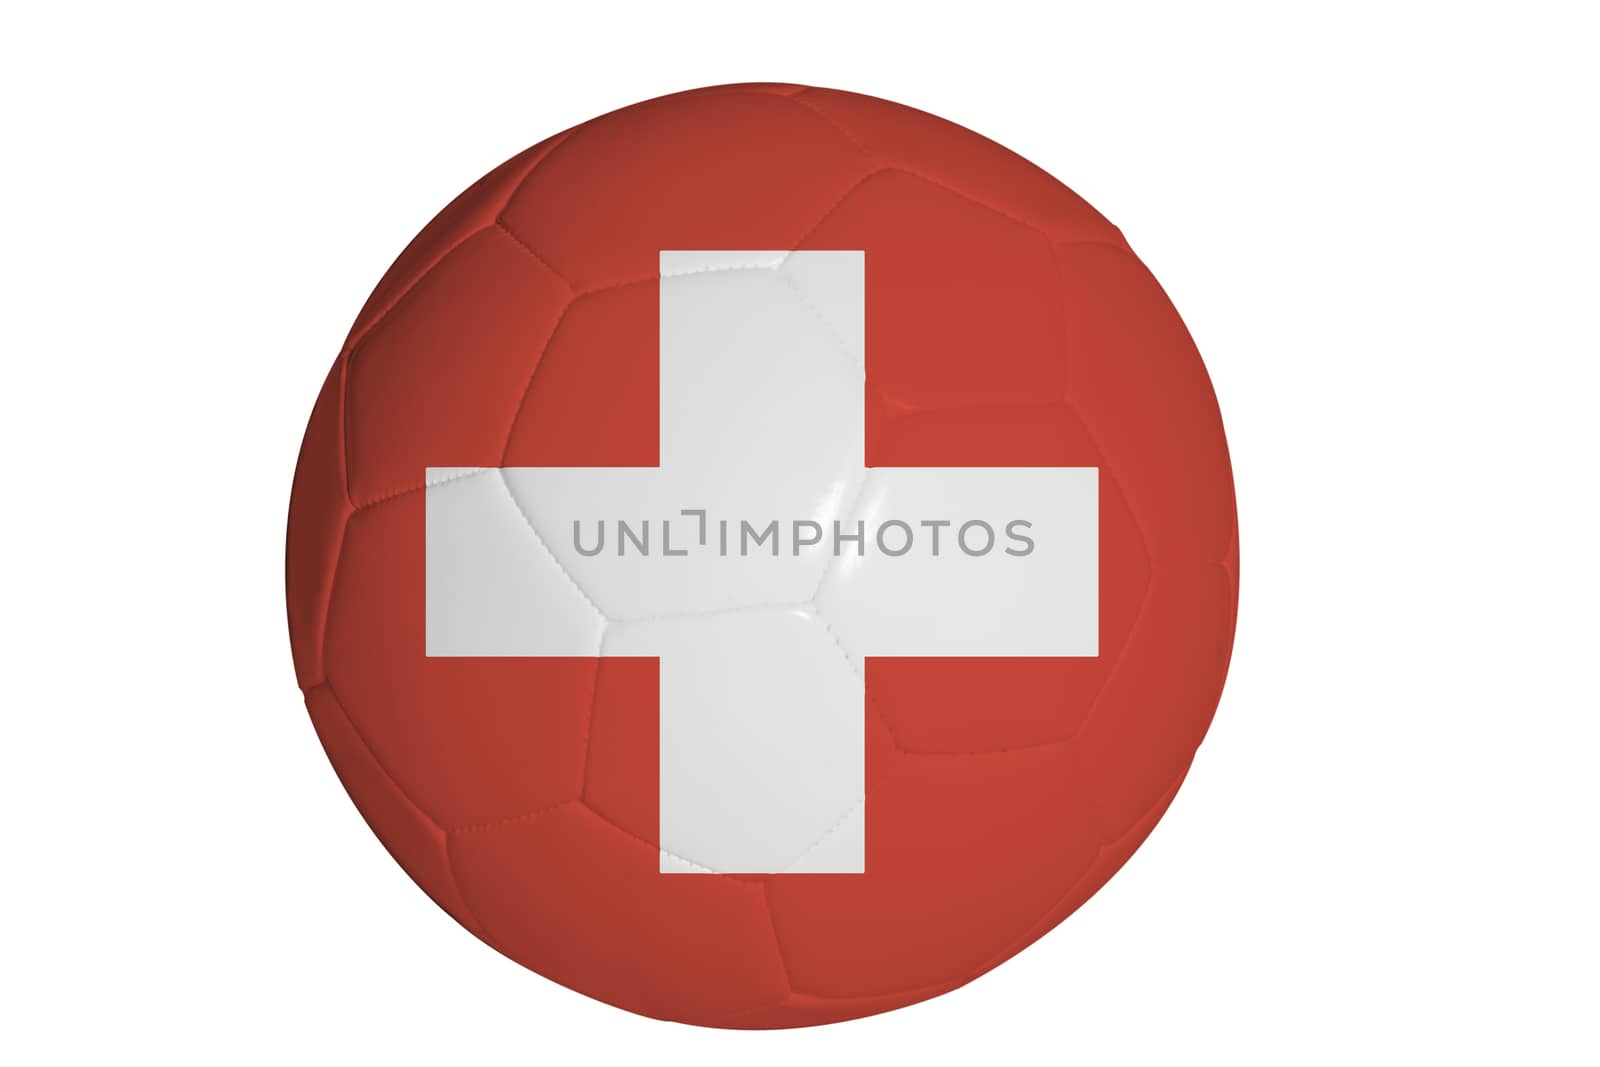 Swiss flag graphic on soccer ball